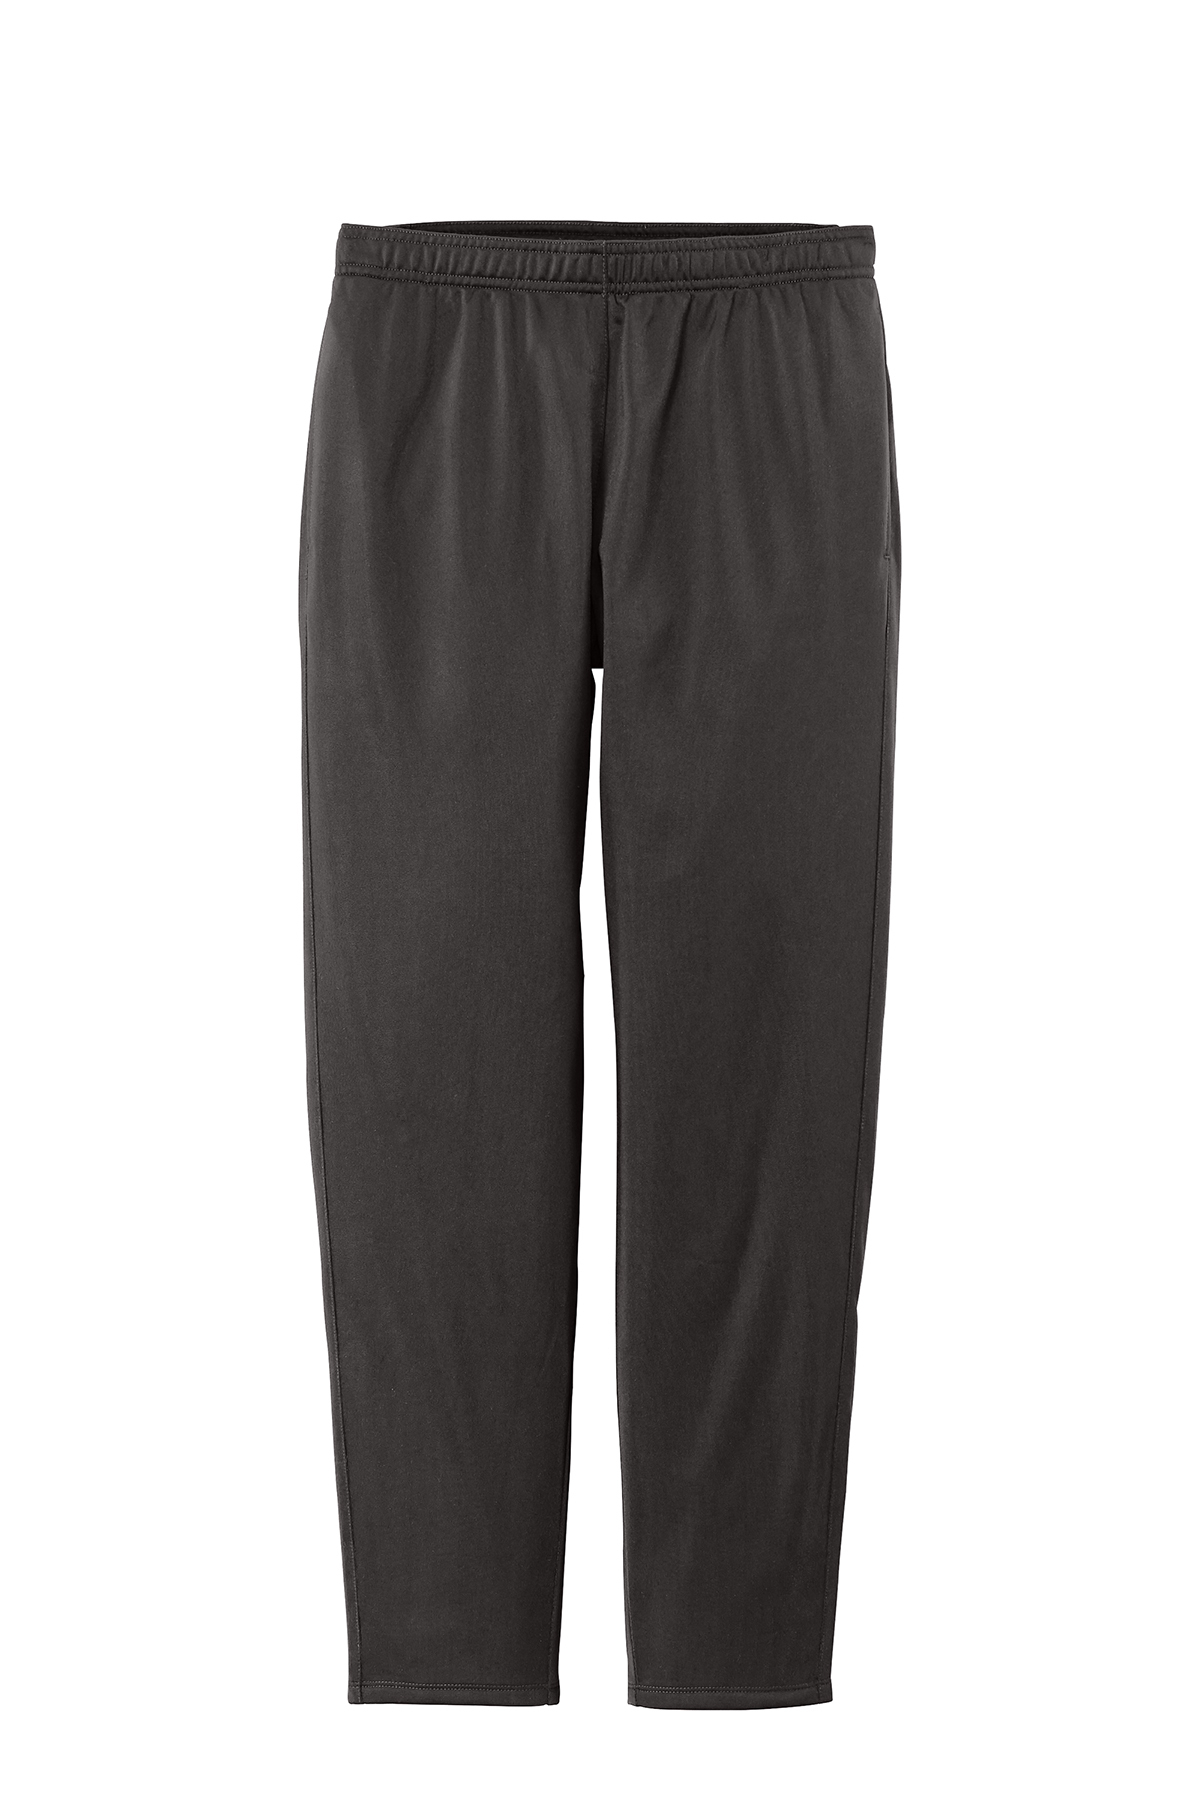 Ladies Track Pants – Charcoal Grey – LIMBA